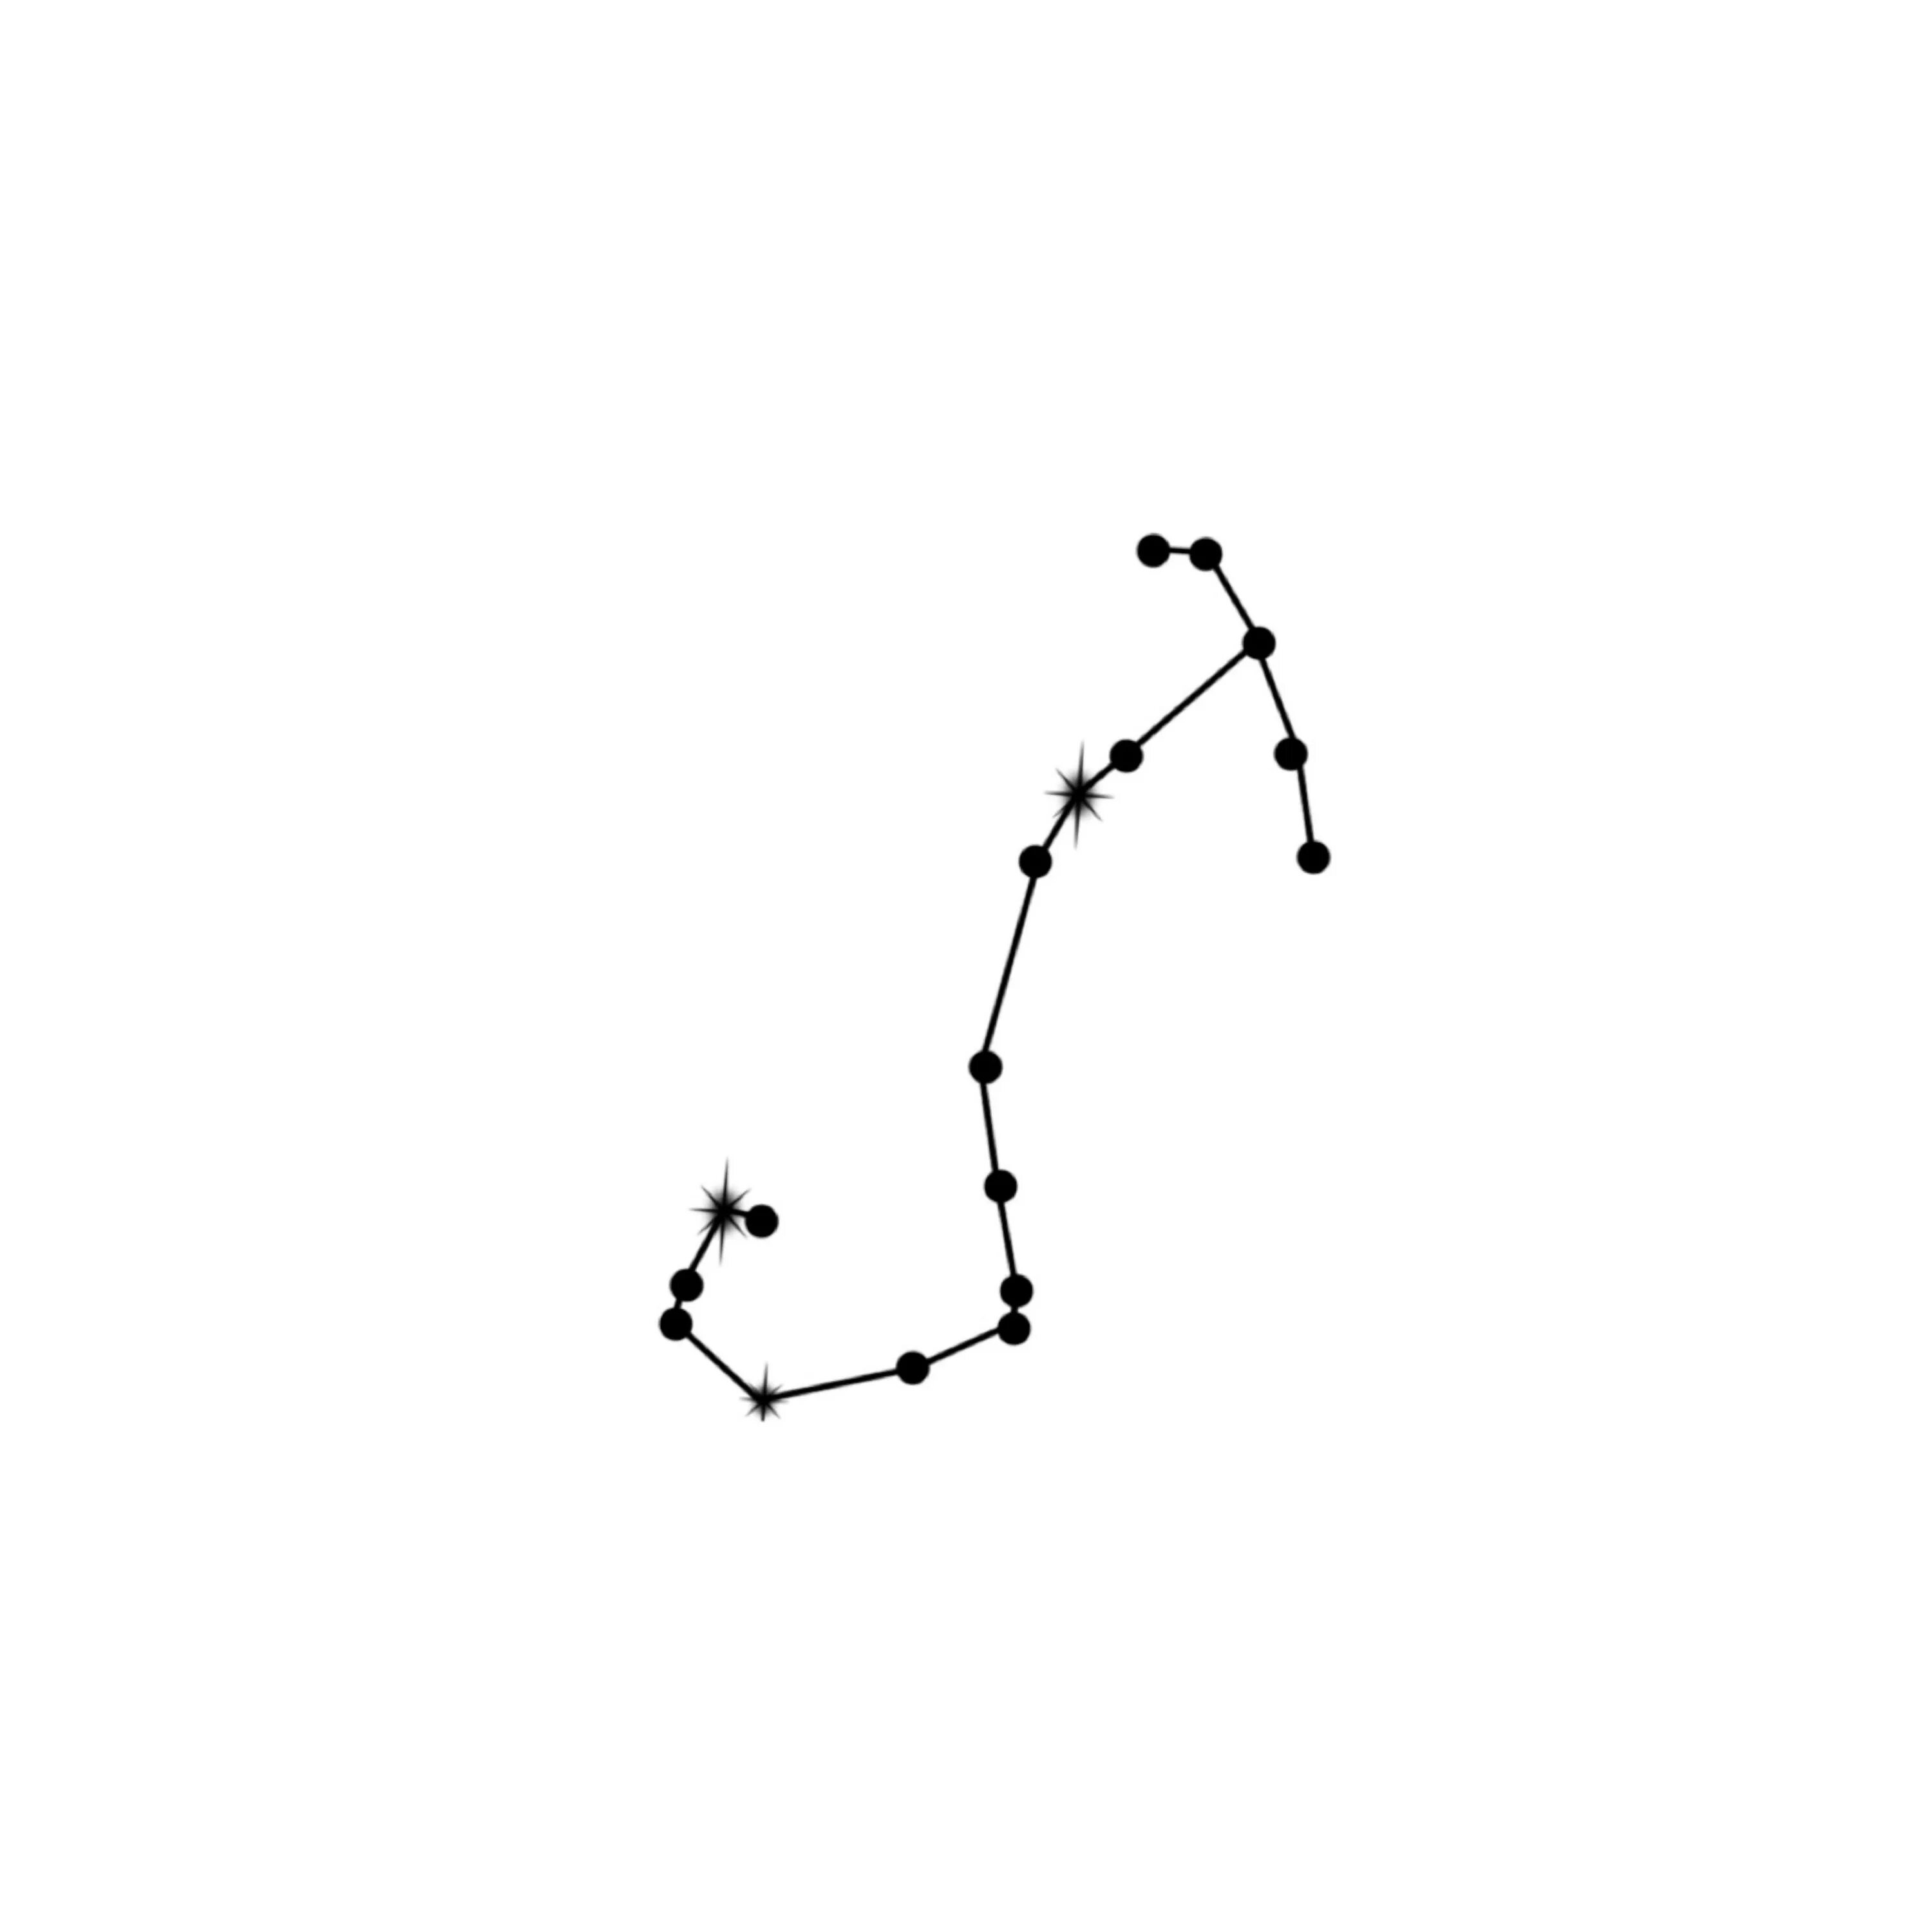 Созвездие 53. Скорпион знак зодиака Созвездие. Скорпион Созвездие схема. Созвездие скорпиона тату эскиз женский. Созвездие Скорпион схематично.